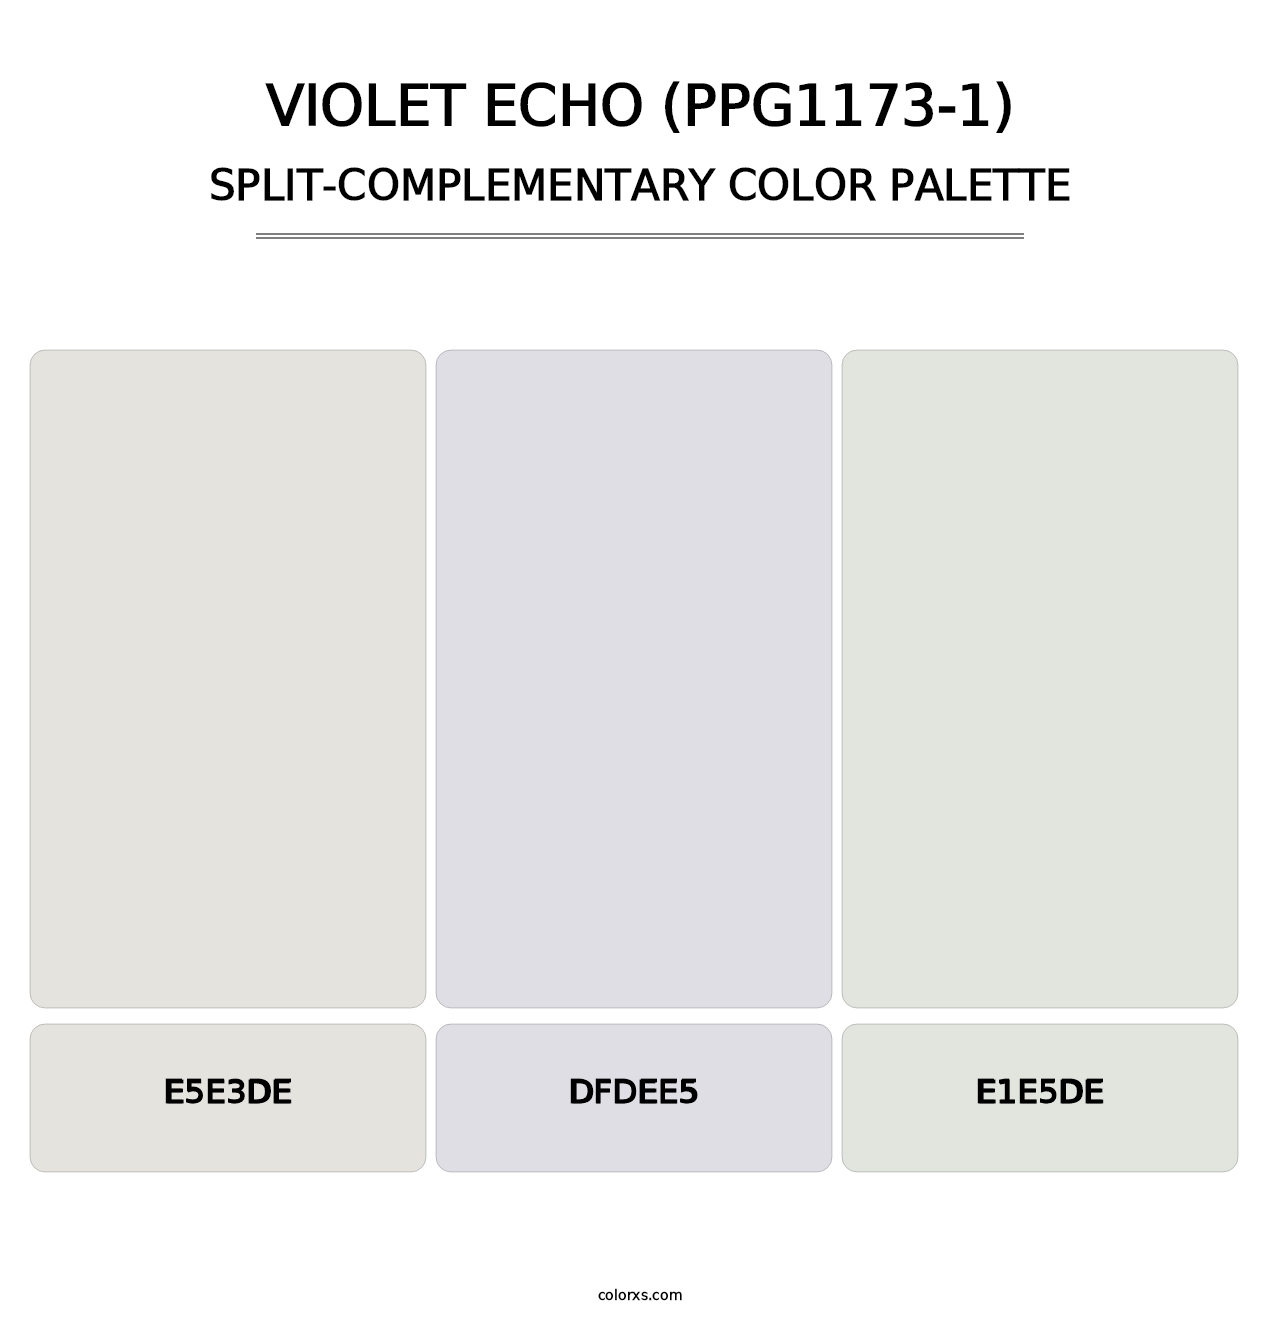 Violet Echo (PPG1173-1) - Split-Complementary Color Palette